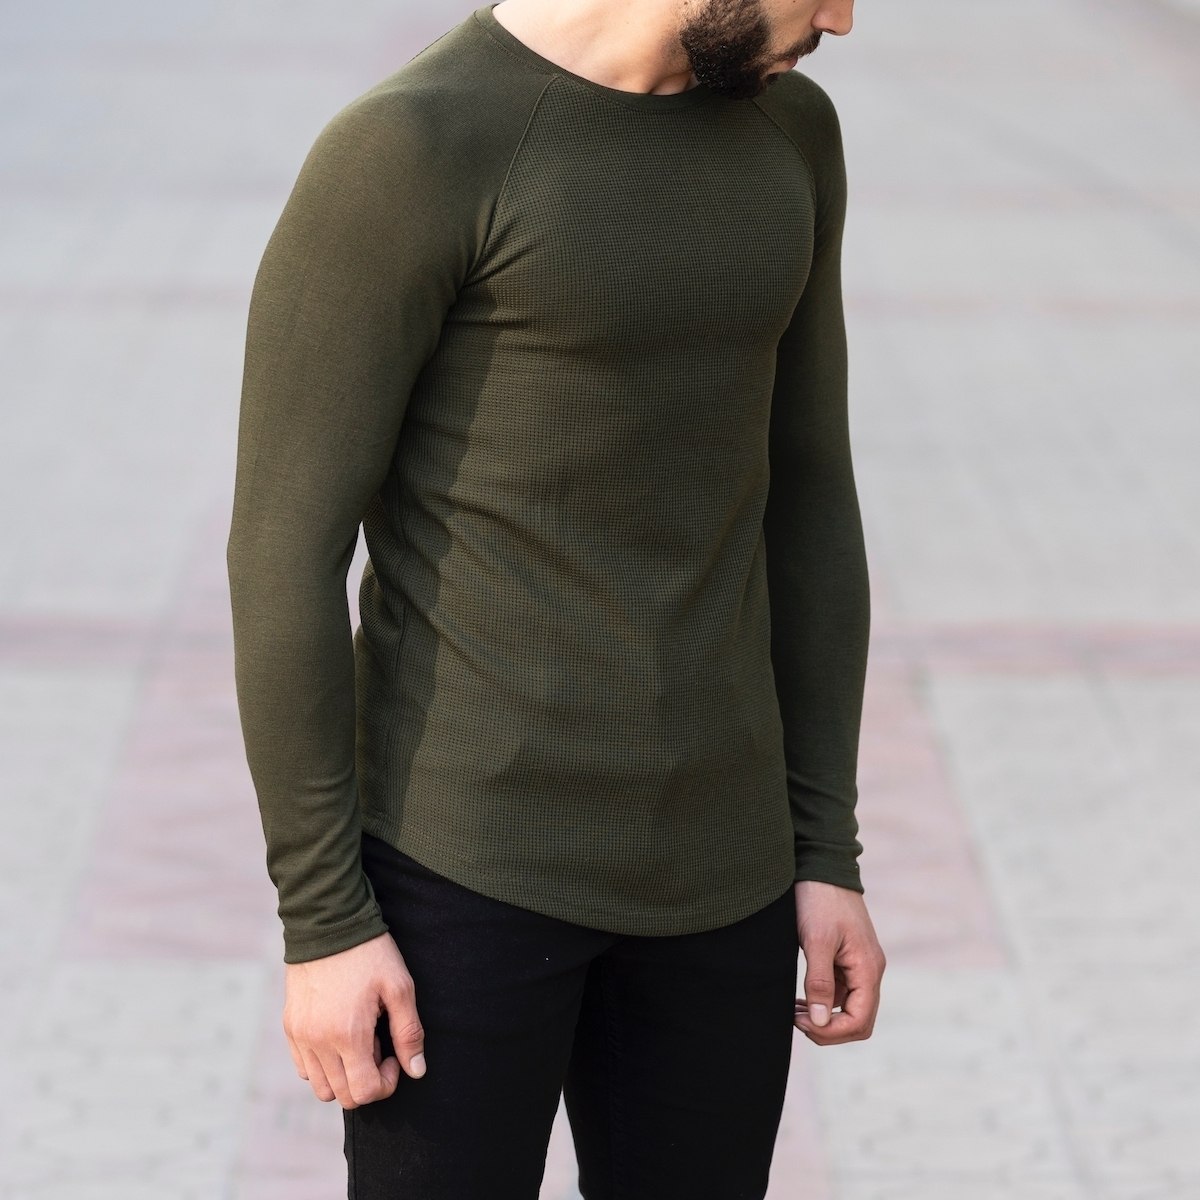 Herren Slim-Fit Sweatshirt in khaki - 2